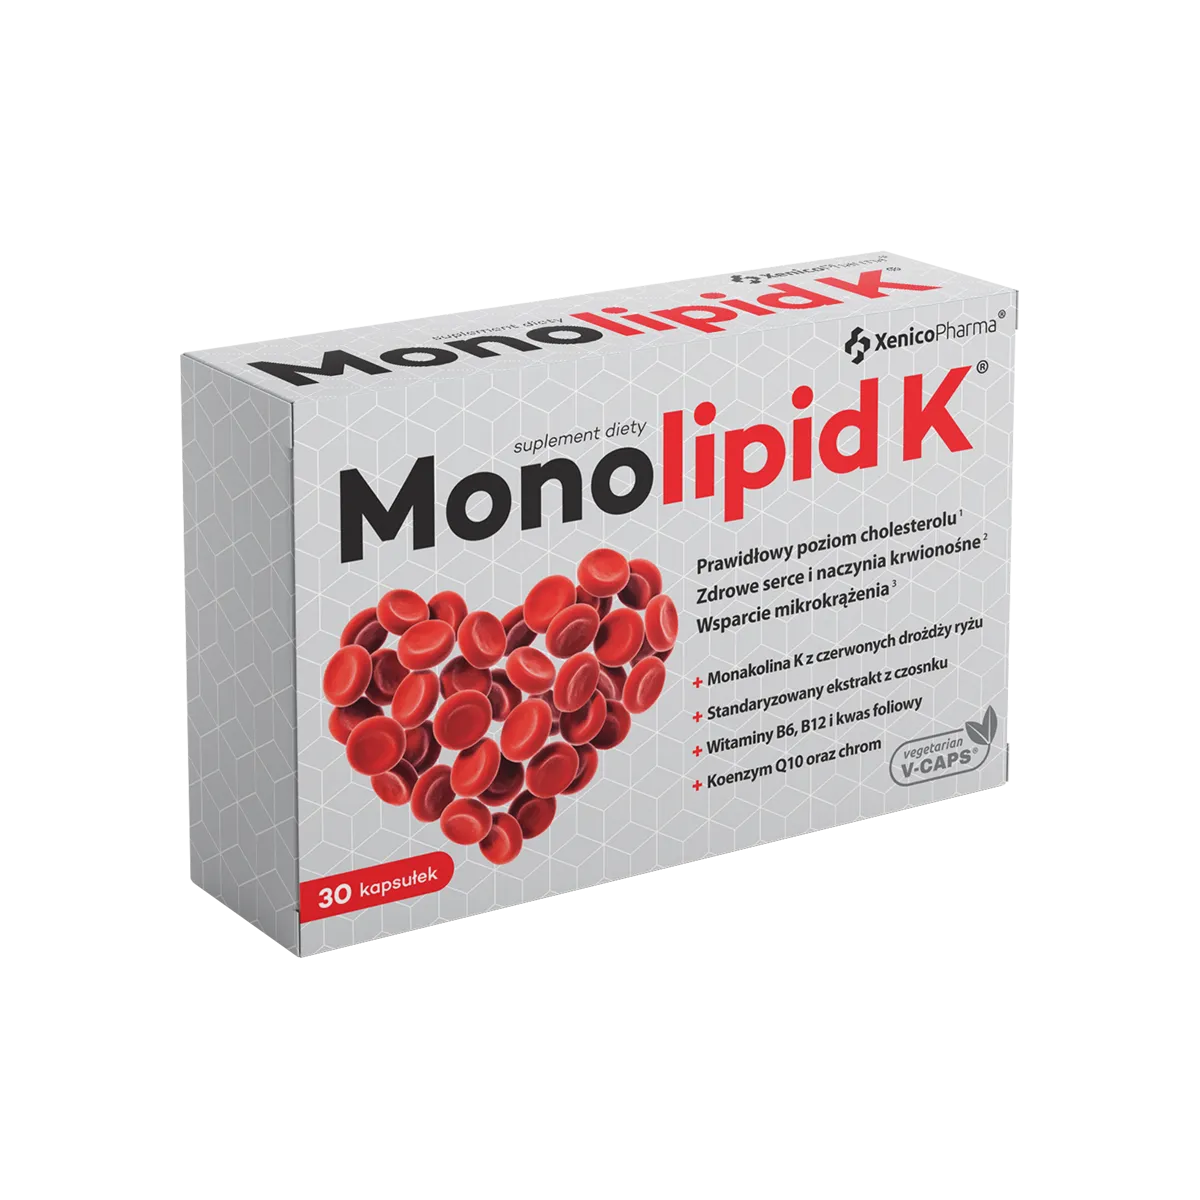 Monolipid K, suplement diety, 30 kapsułek